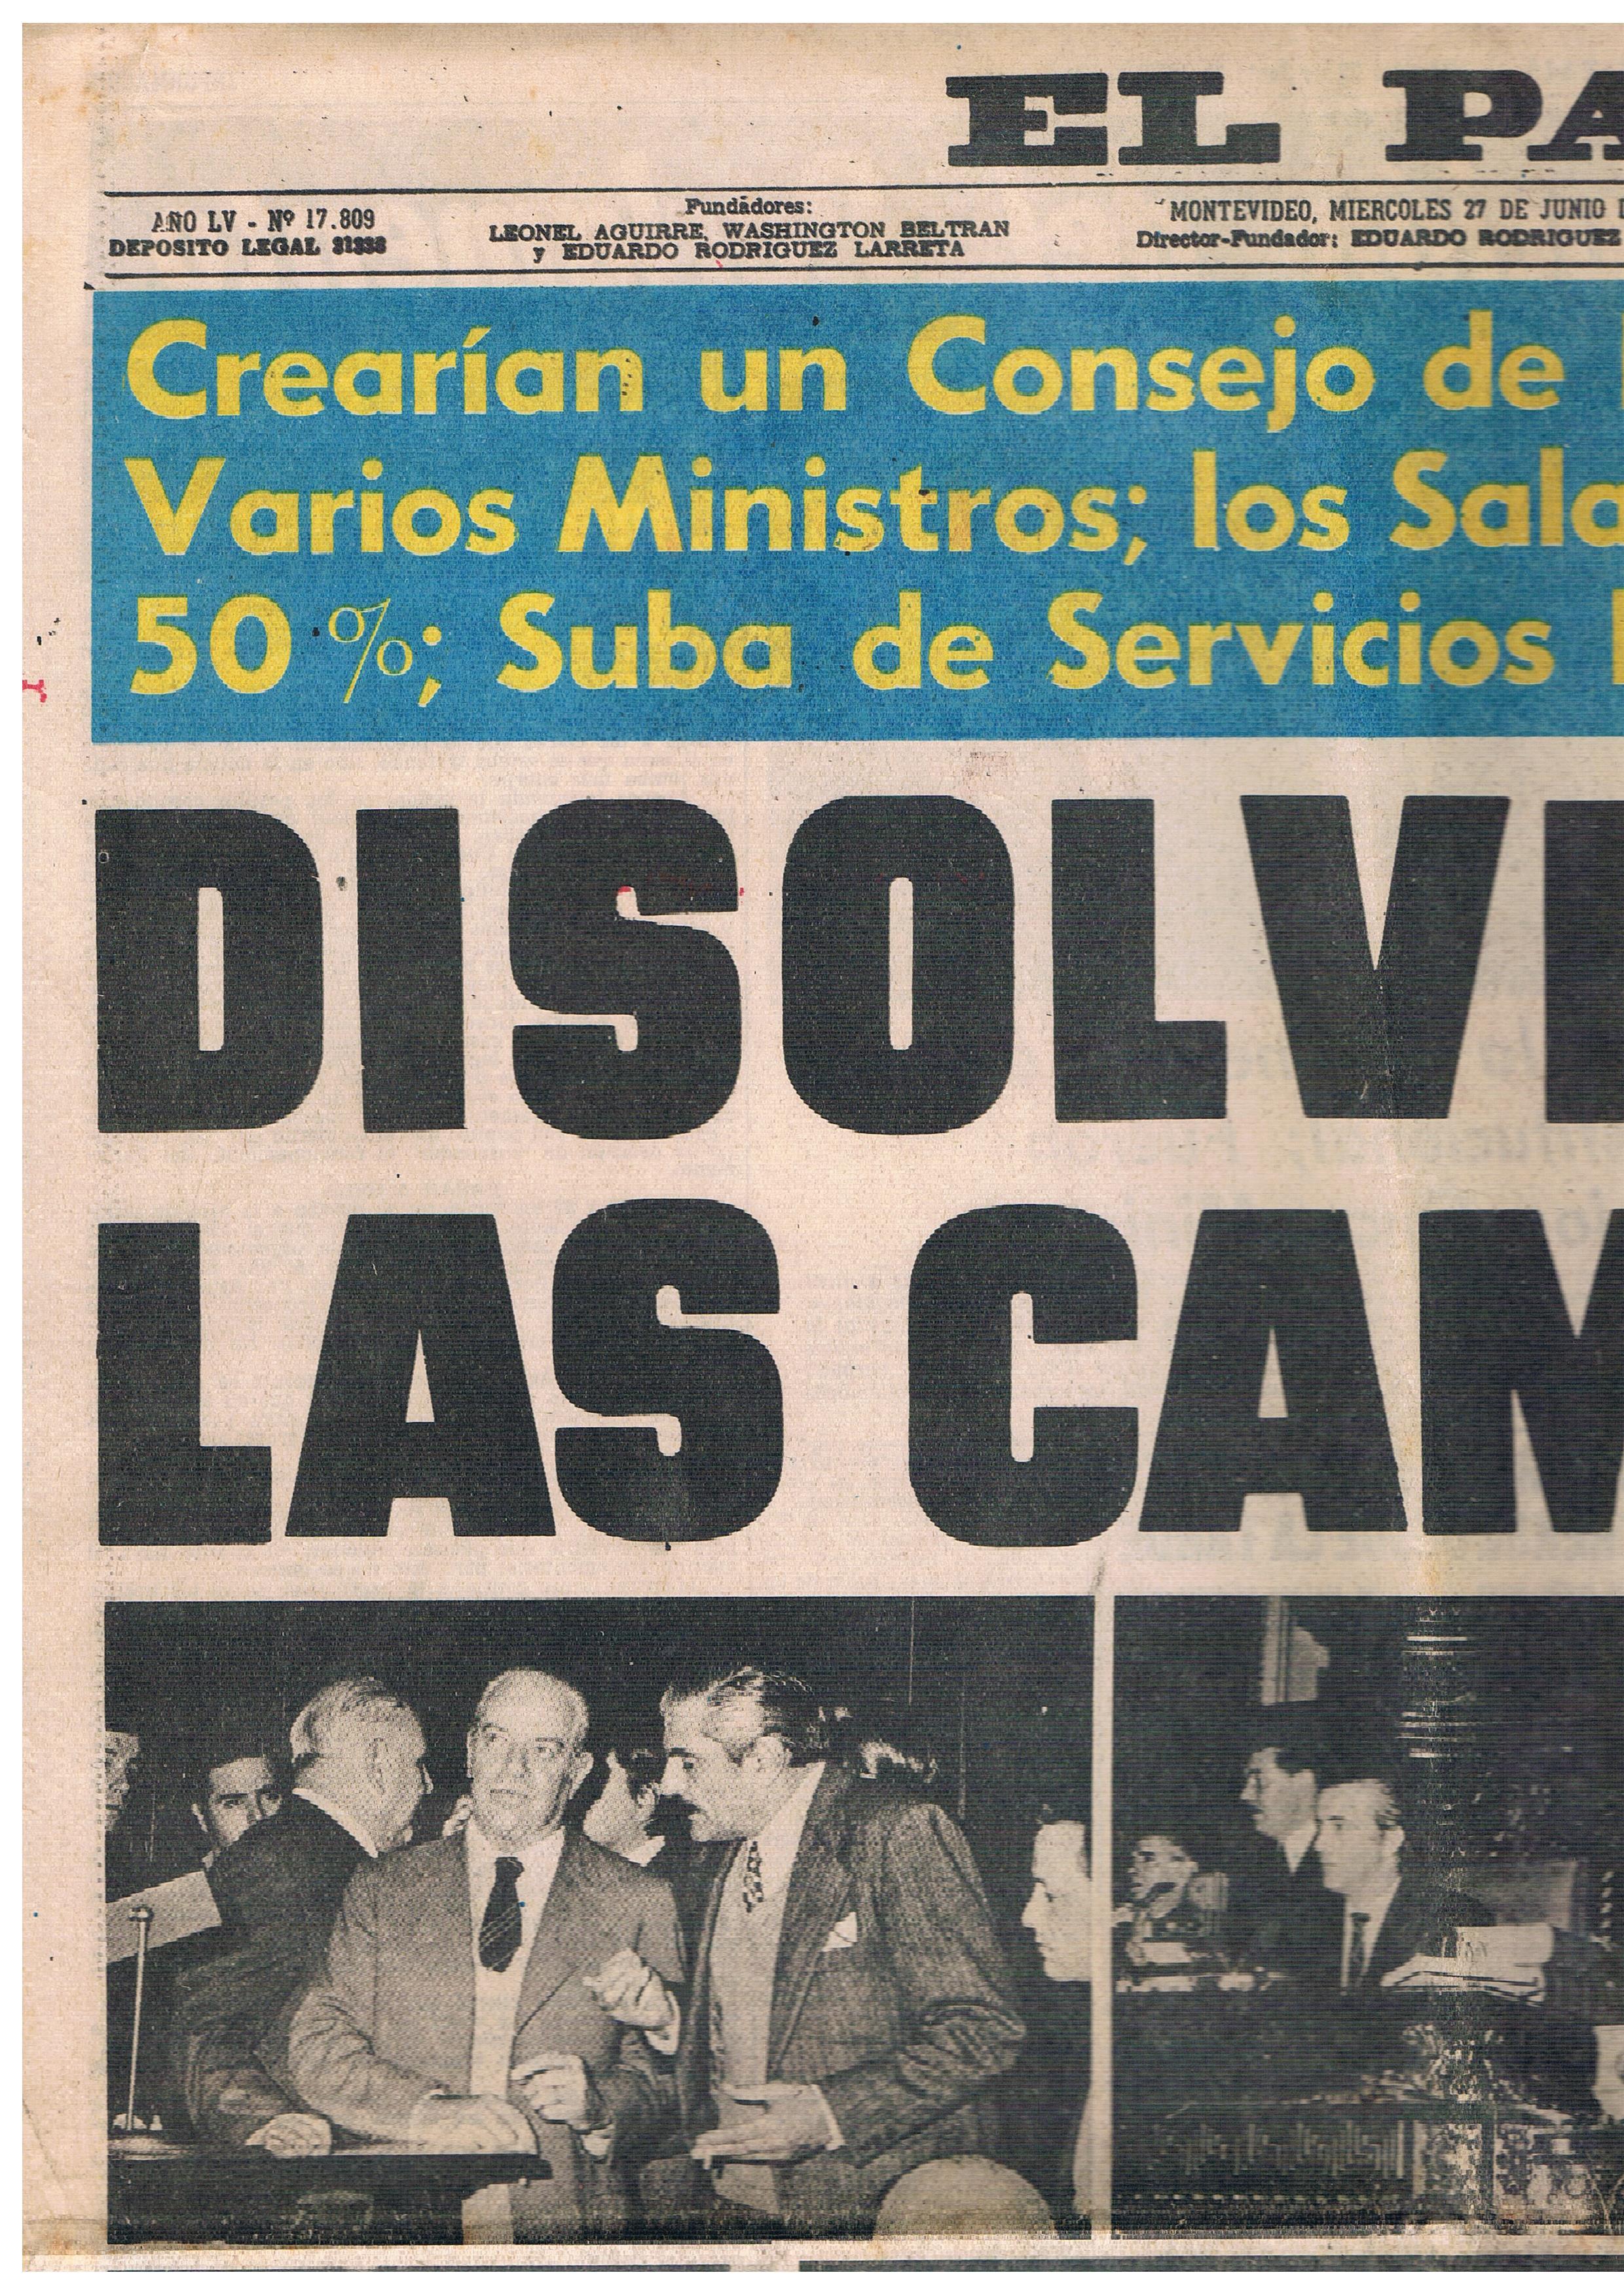 27.06.1973 Disolverian Las Camaras -.1.jpg